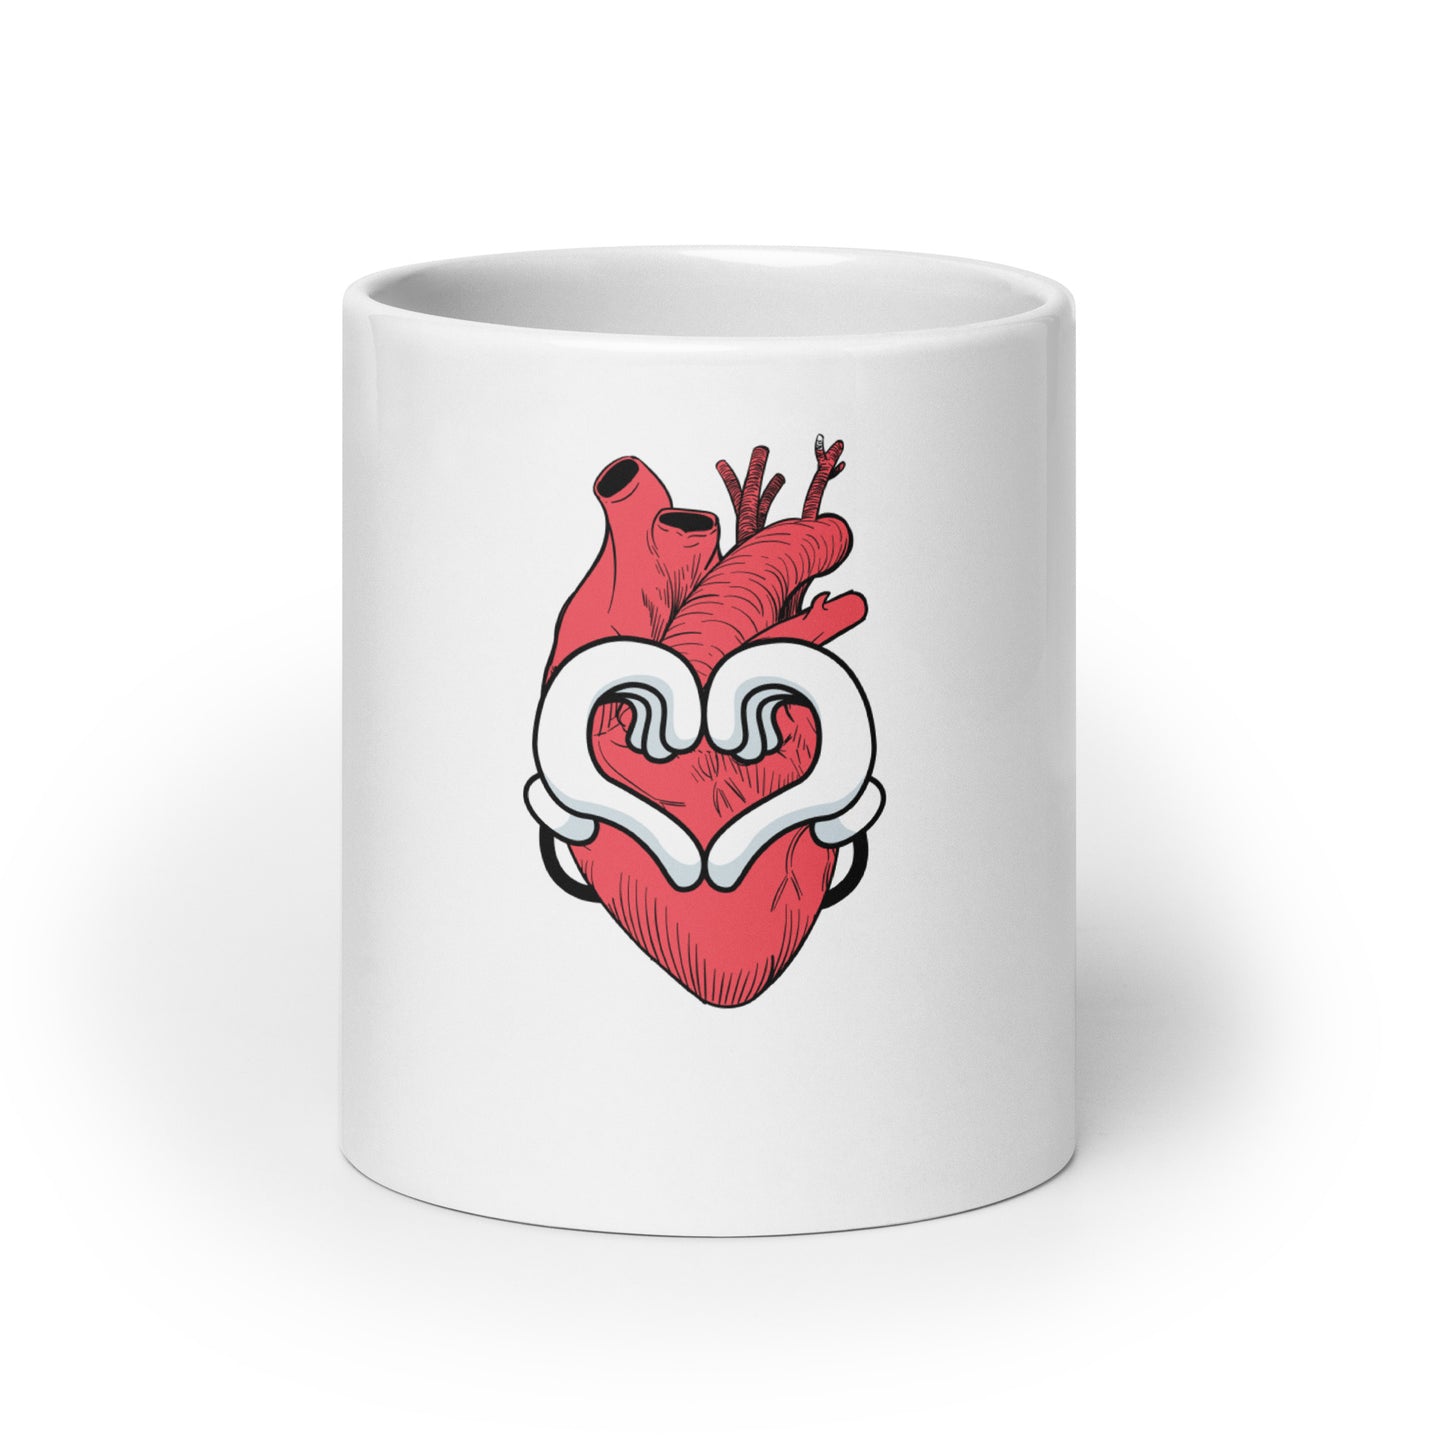 The Heart Never Forgets A Good Deed White glossy mug